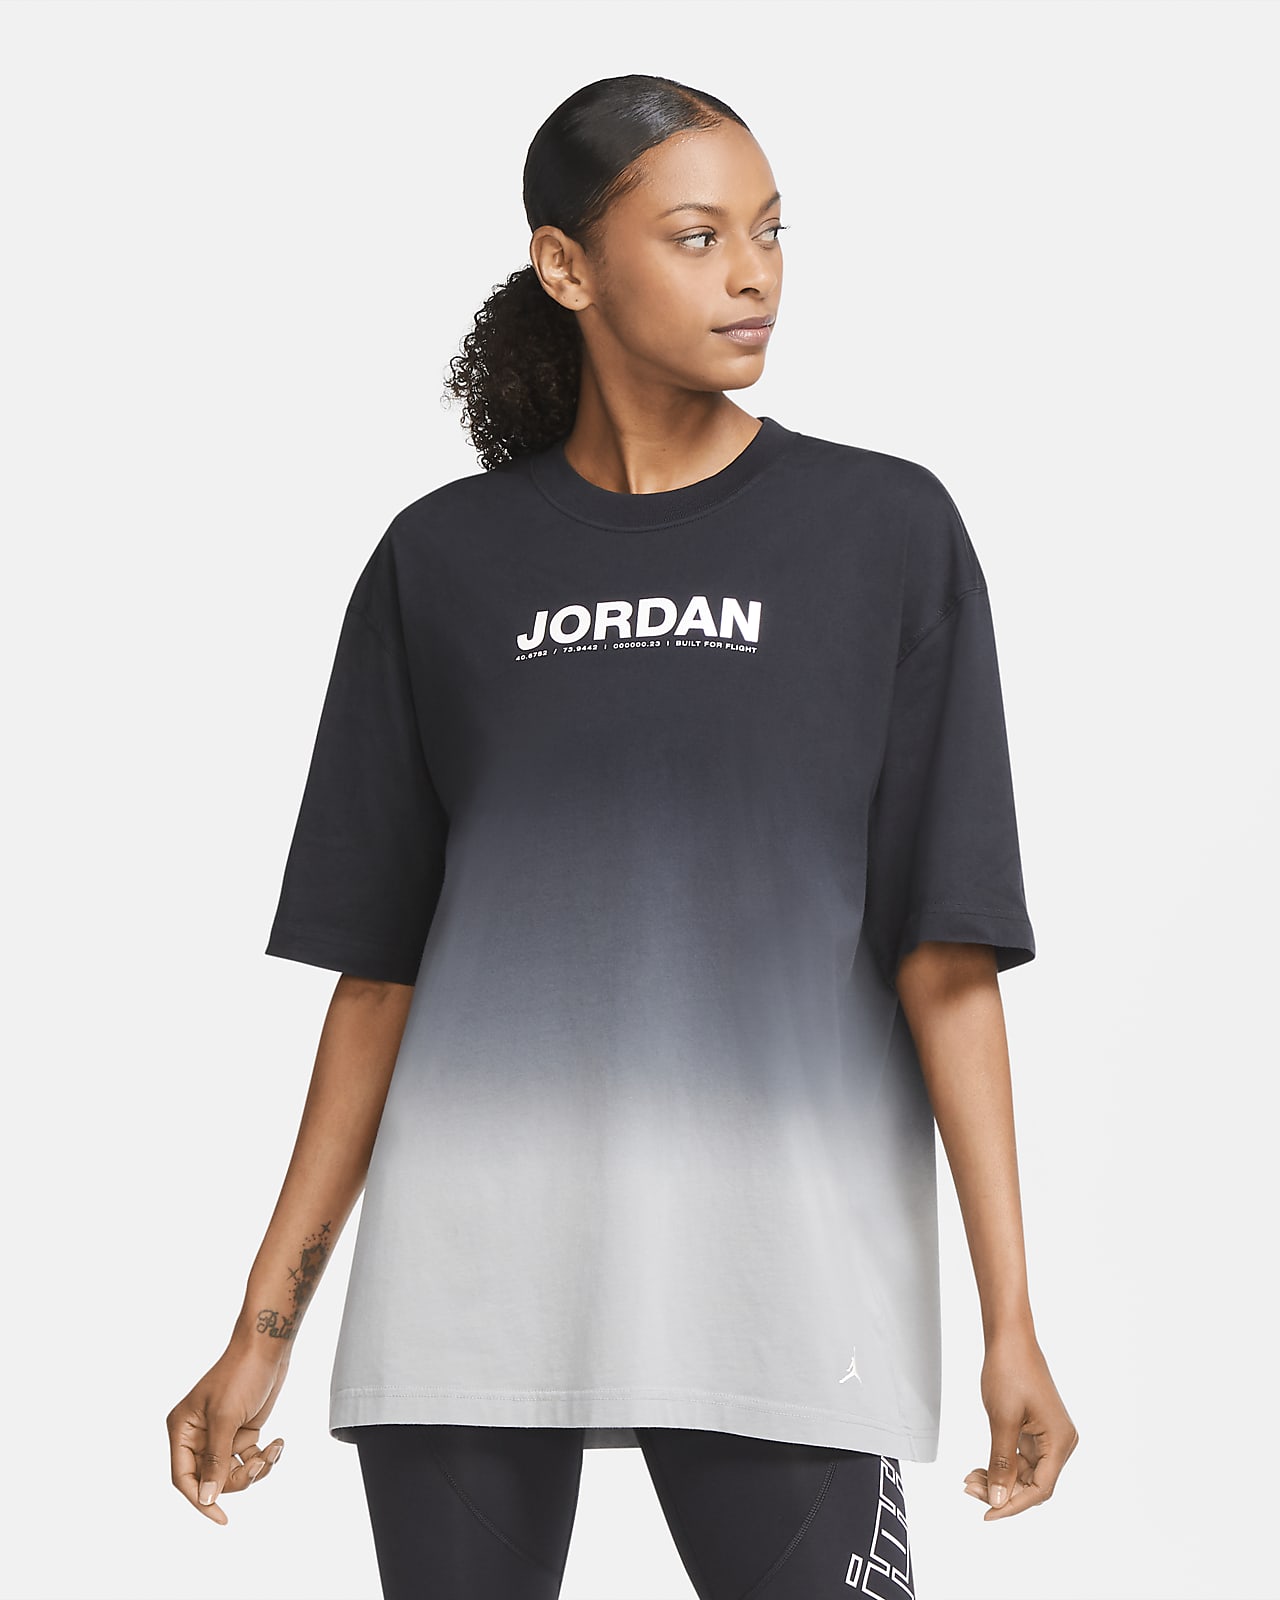 tee shirt nike femme jordan